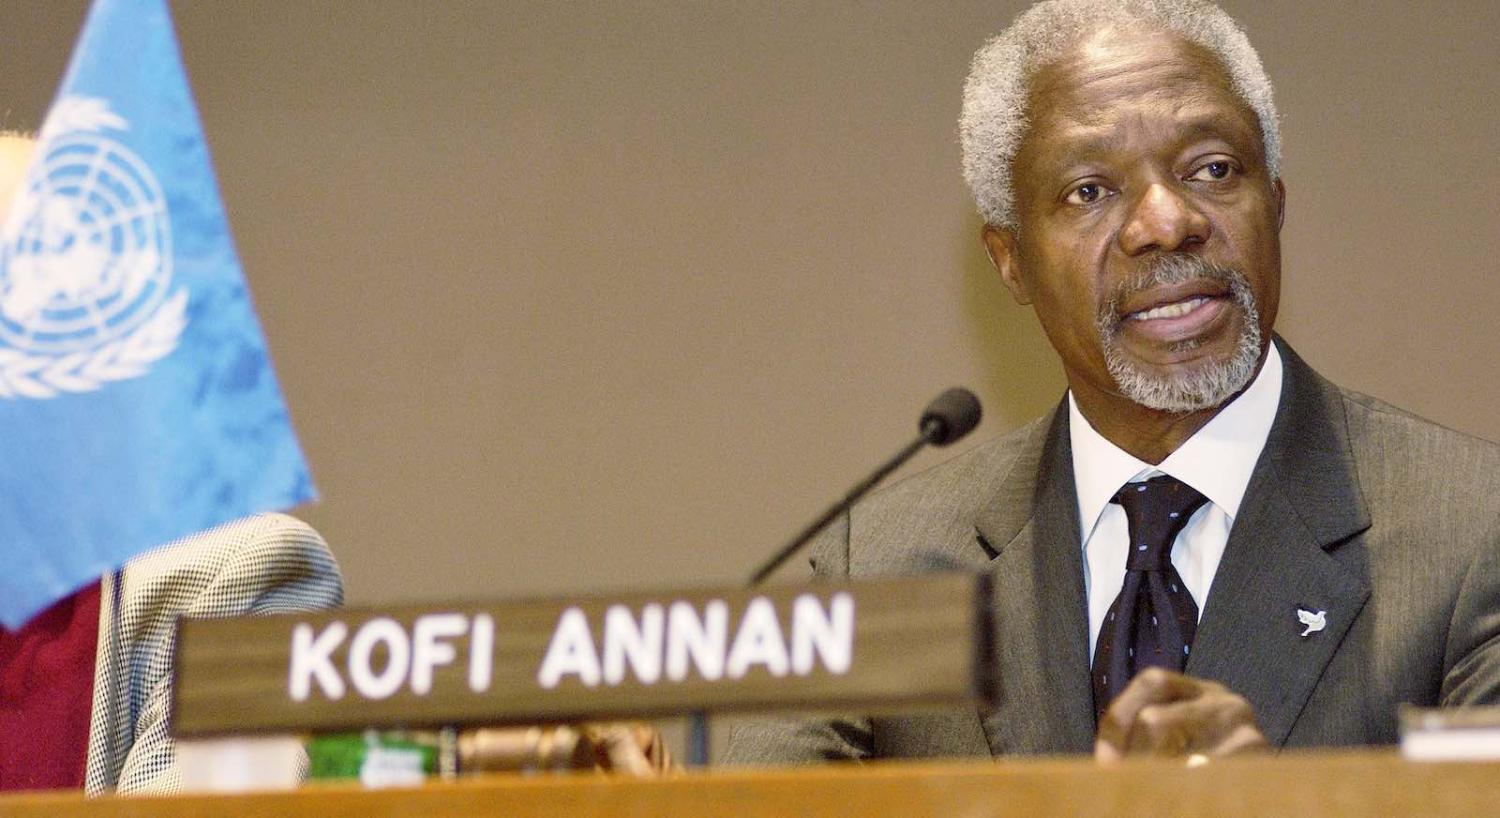 Kofi Annan, in 2004, during his term as UN Secretary General (Photo: Mark Garten/UN)